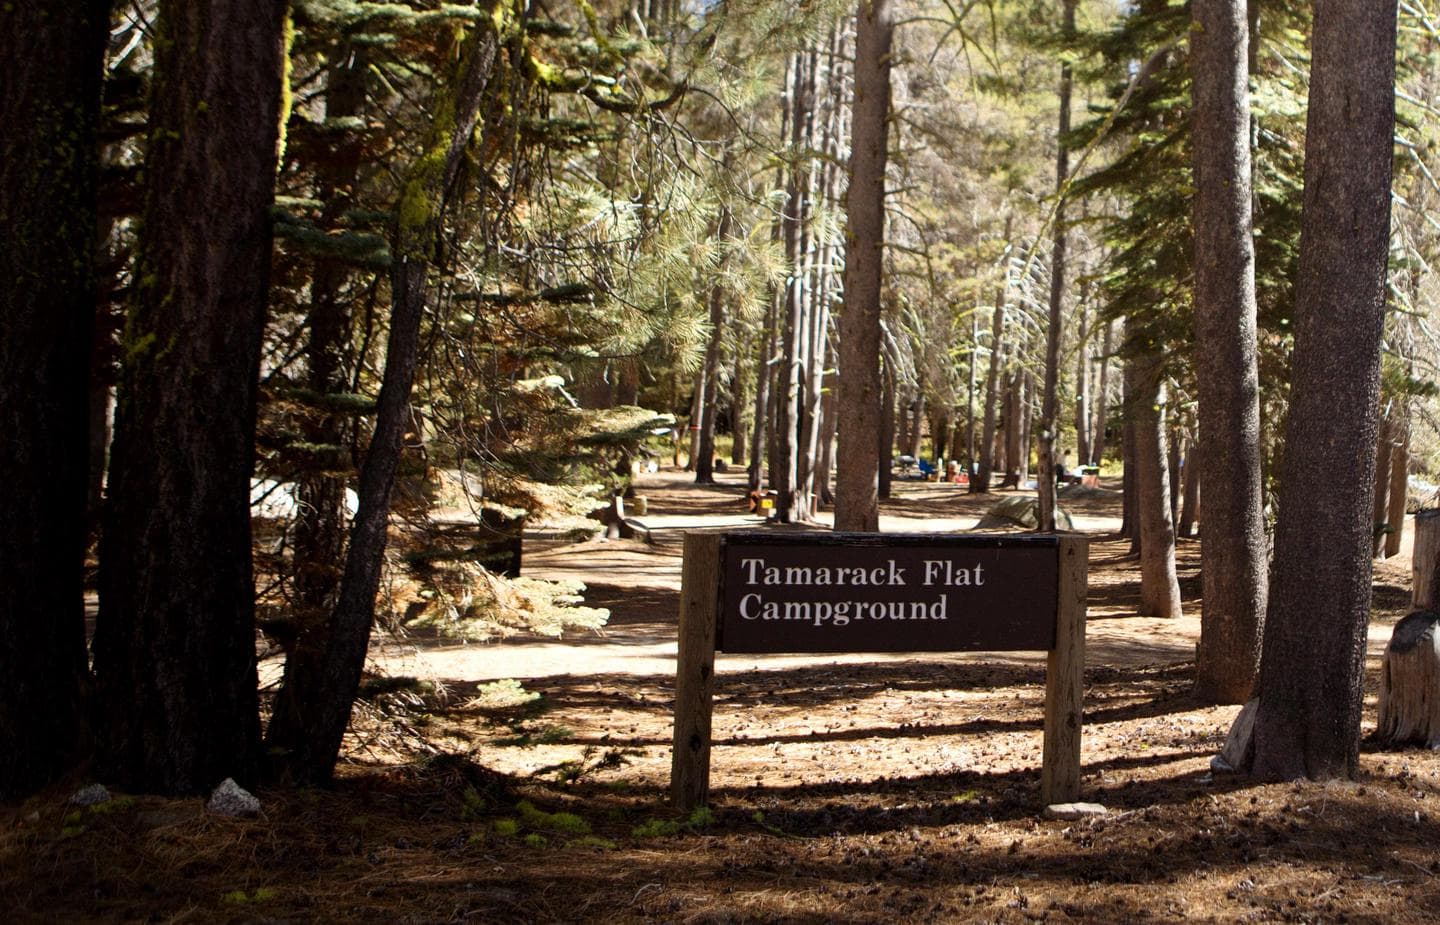 Tamarack Flat Campground (No RV’s)